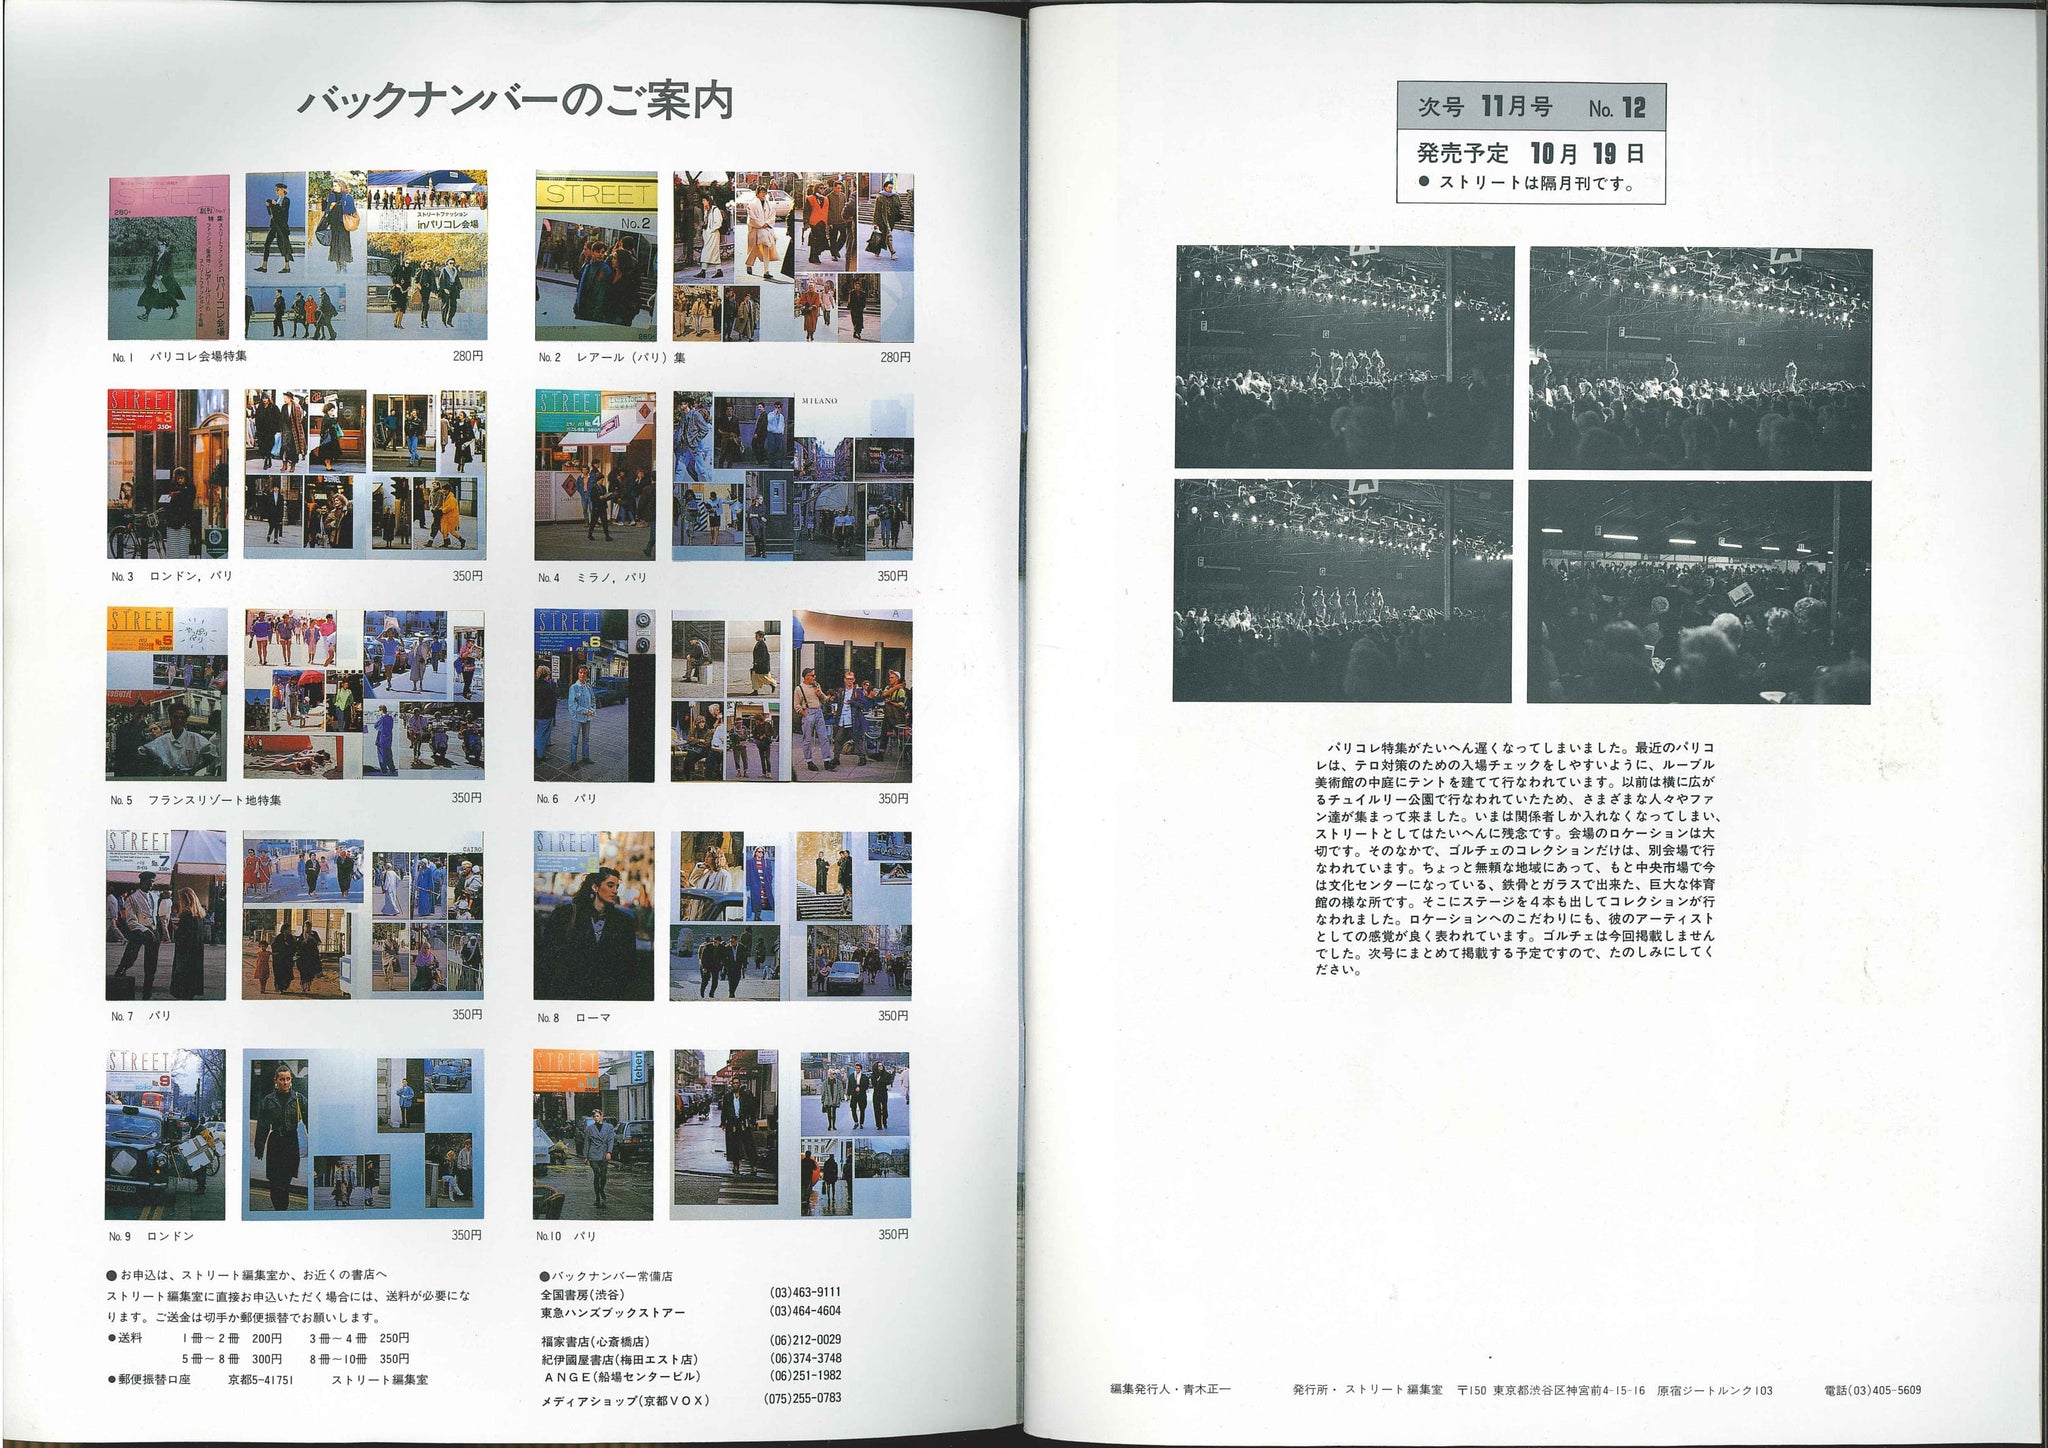 STREET magazine no. 11 / september 1987 / paris collections / Shoichi Aoki